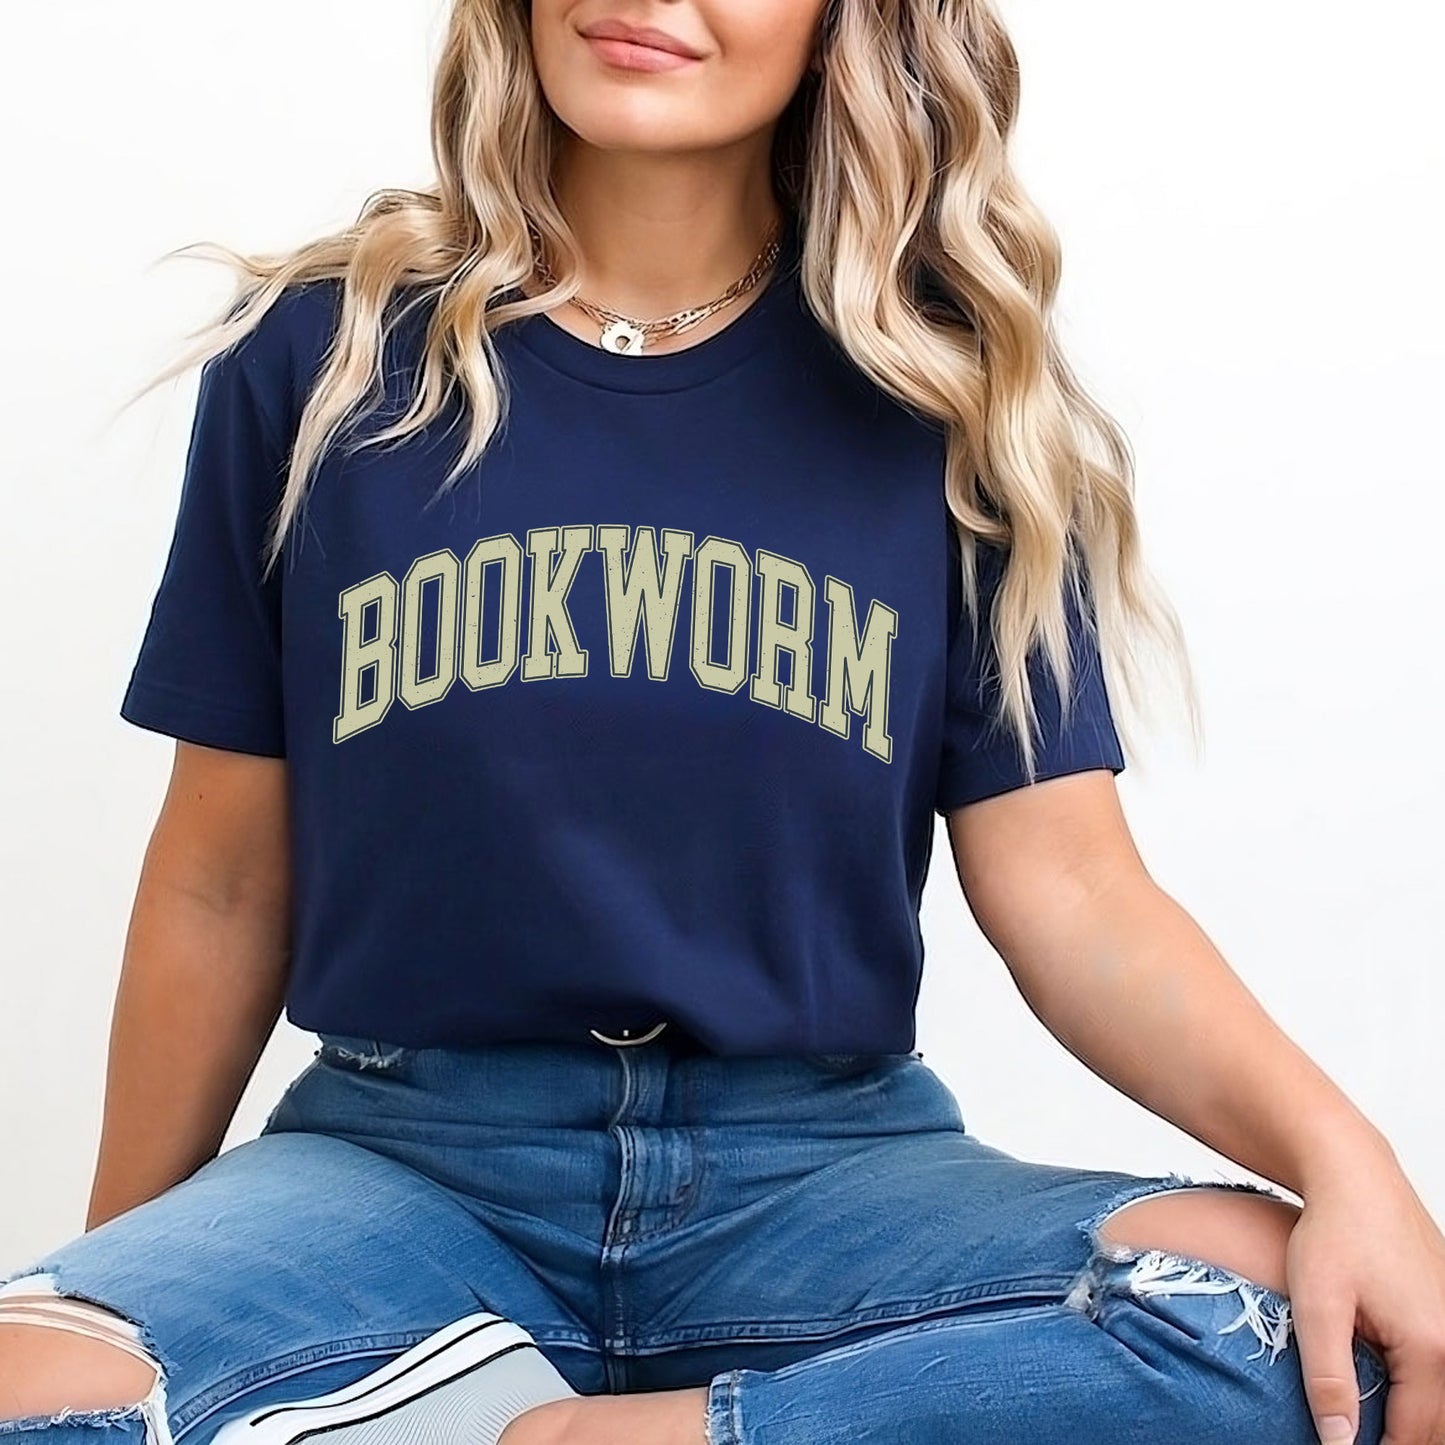 Bookworm T-Shirt, Book Club Gift